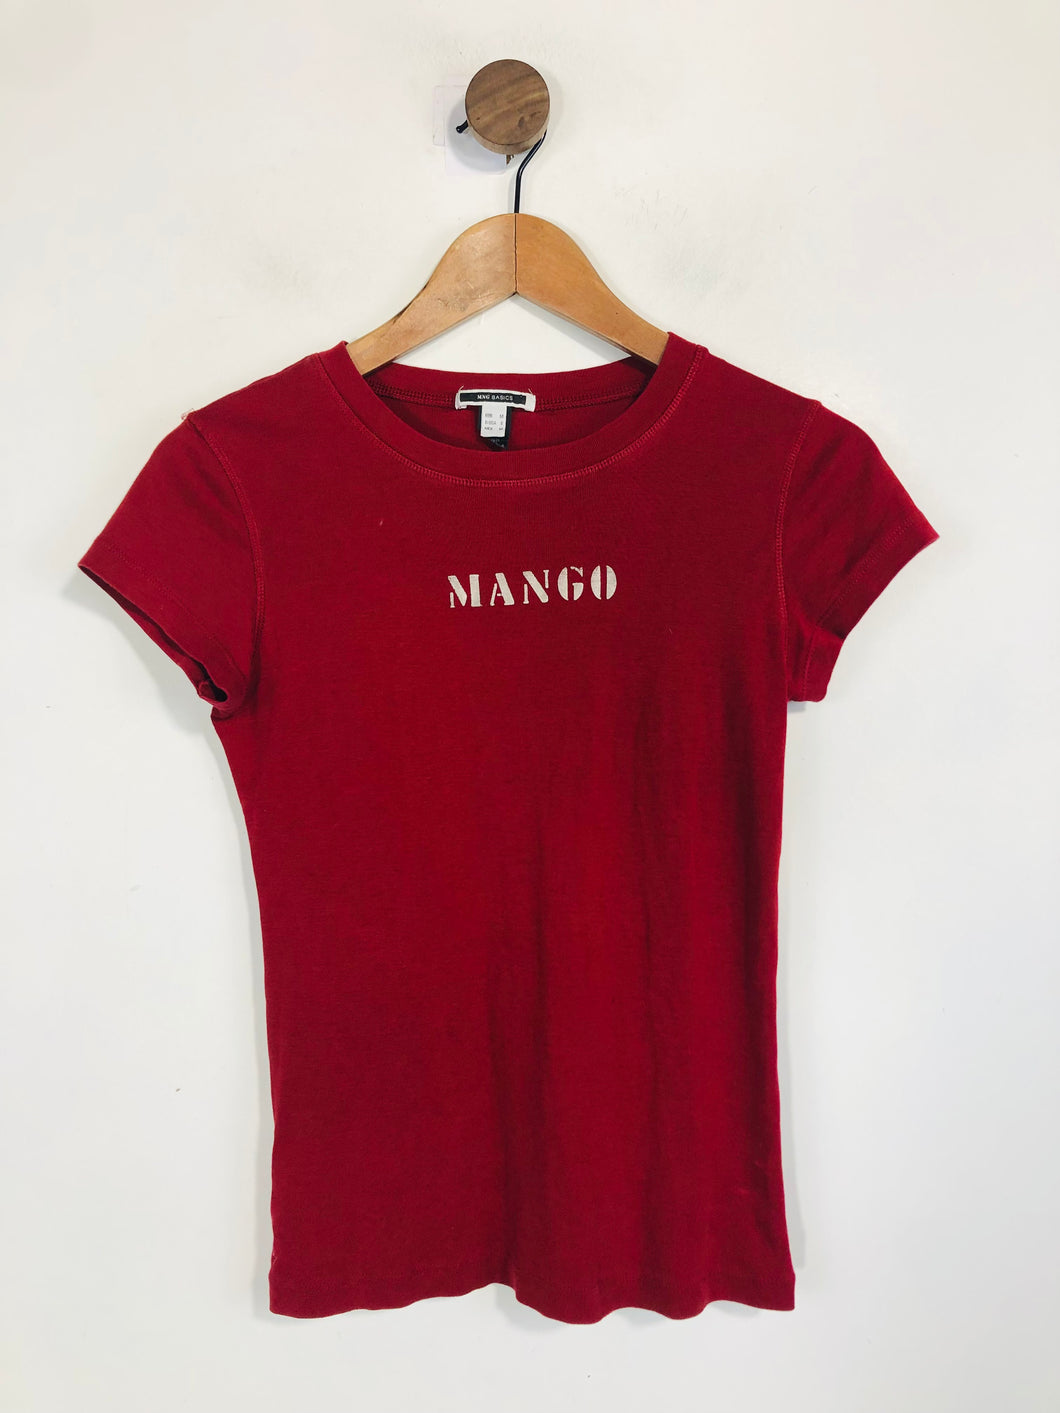 Mango Women's Cotton T-Shirt | M UK10-12 | Red